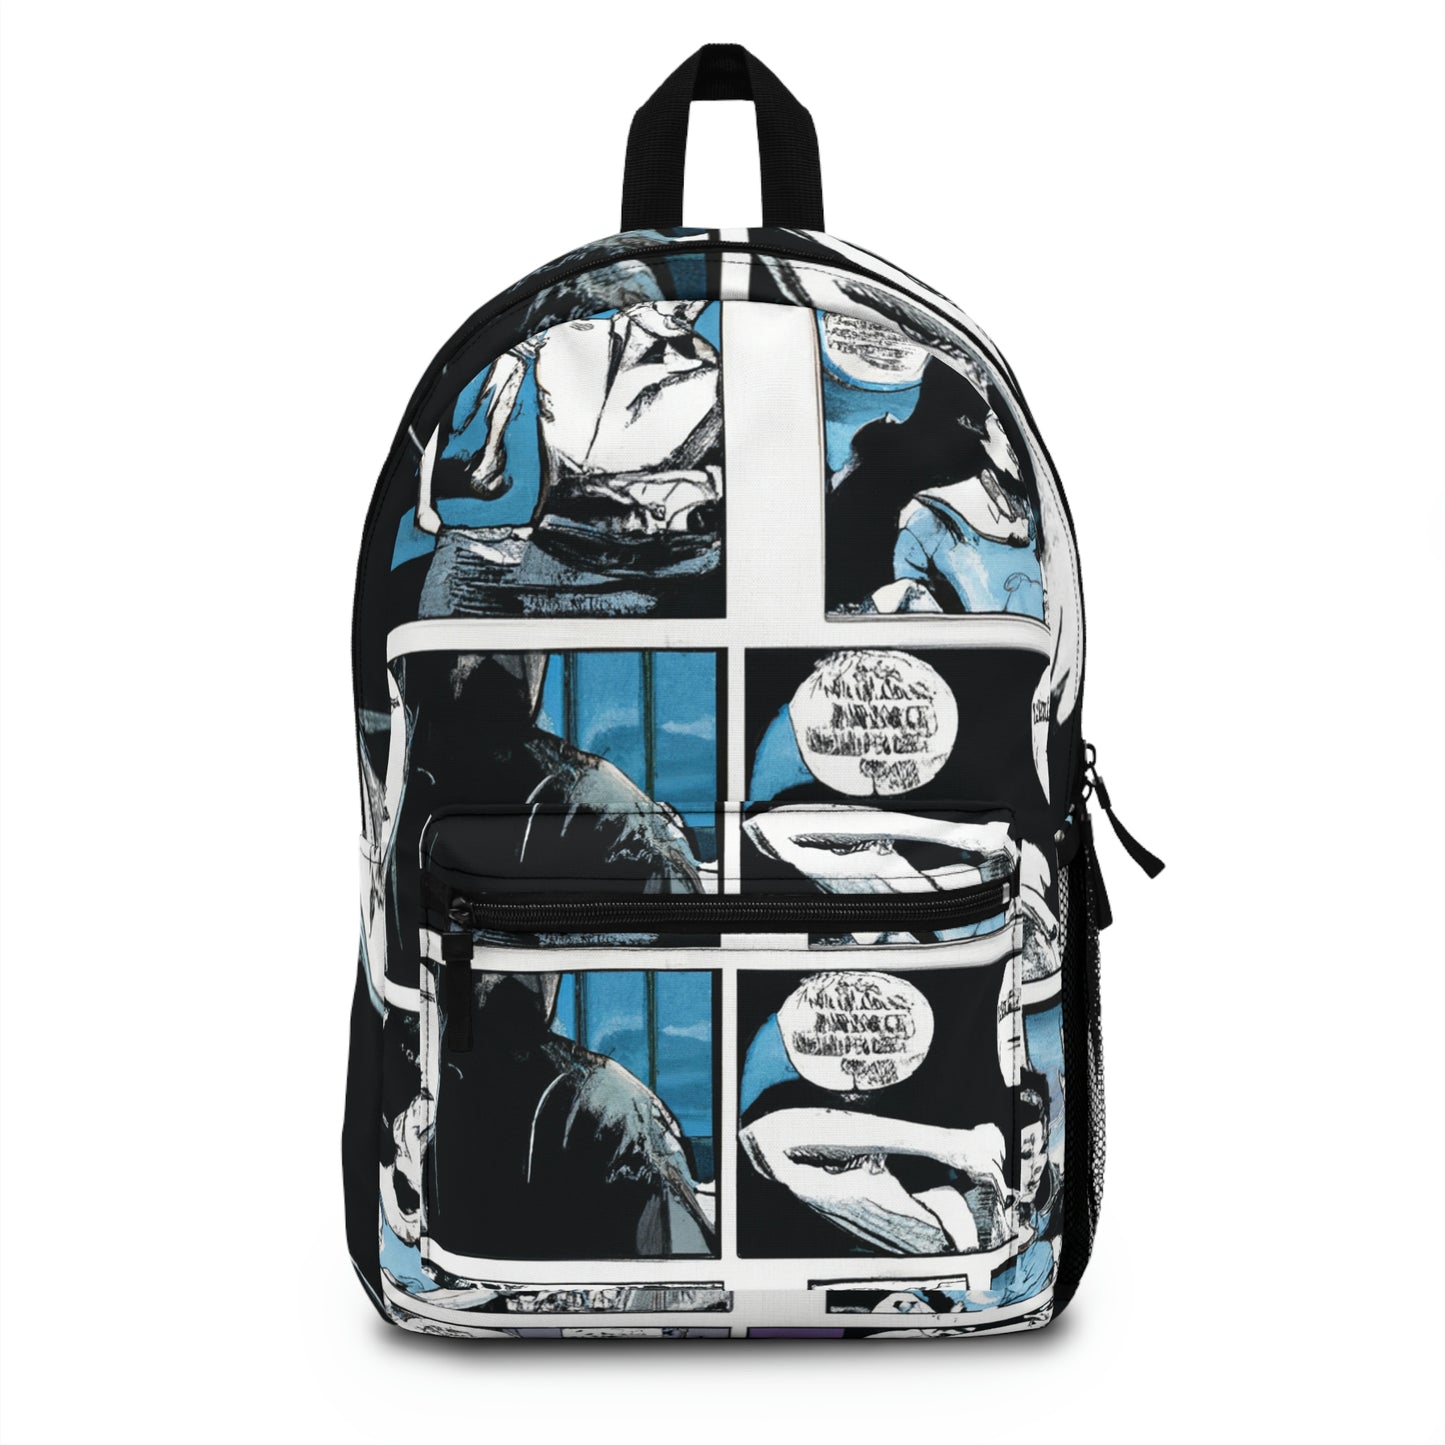 Dazzle Devlin - Comic Book Backpack